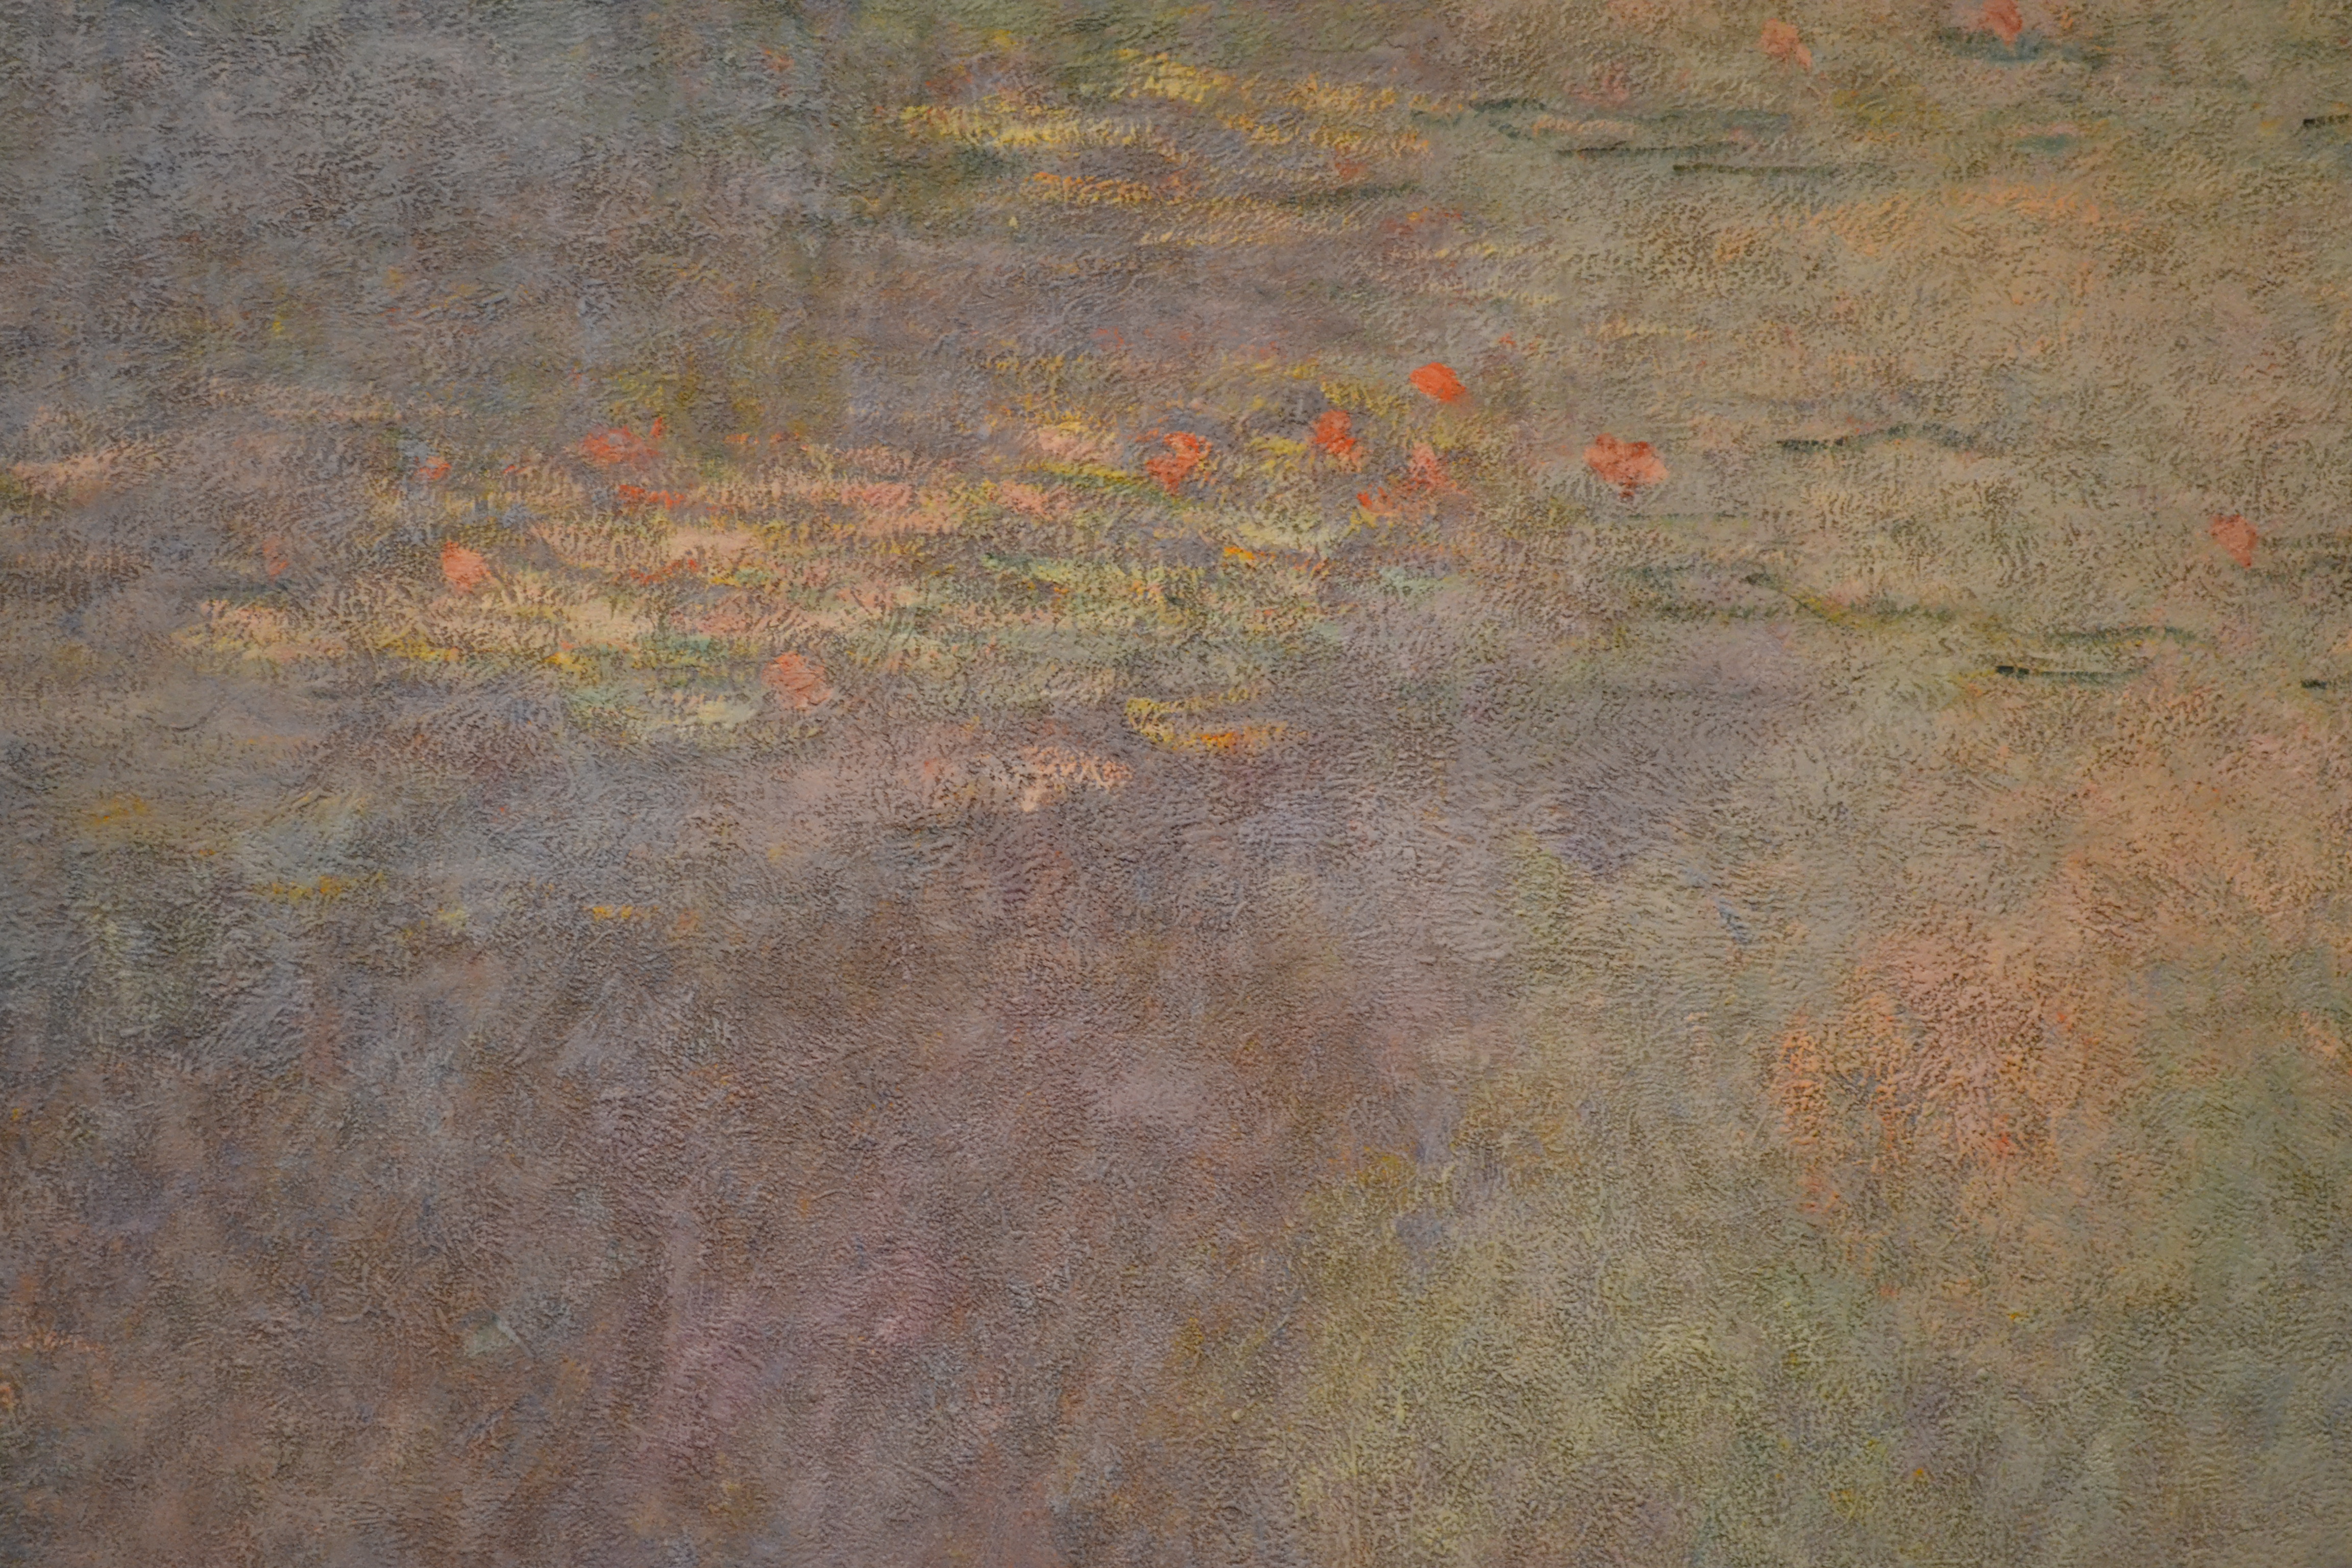 MoMA_Monet